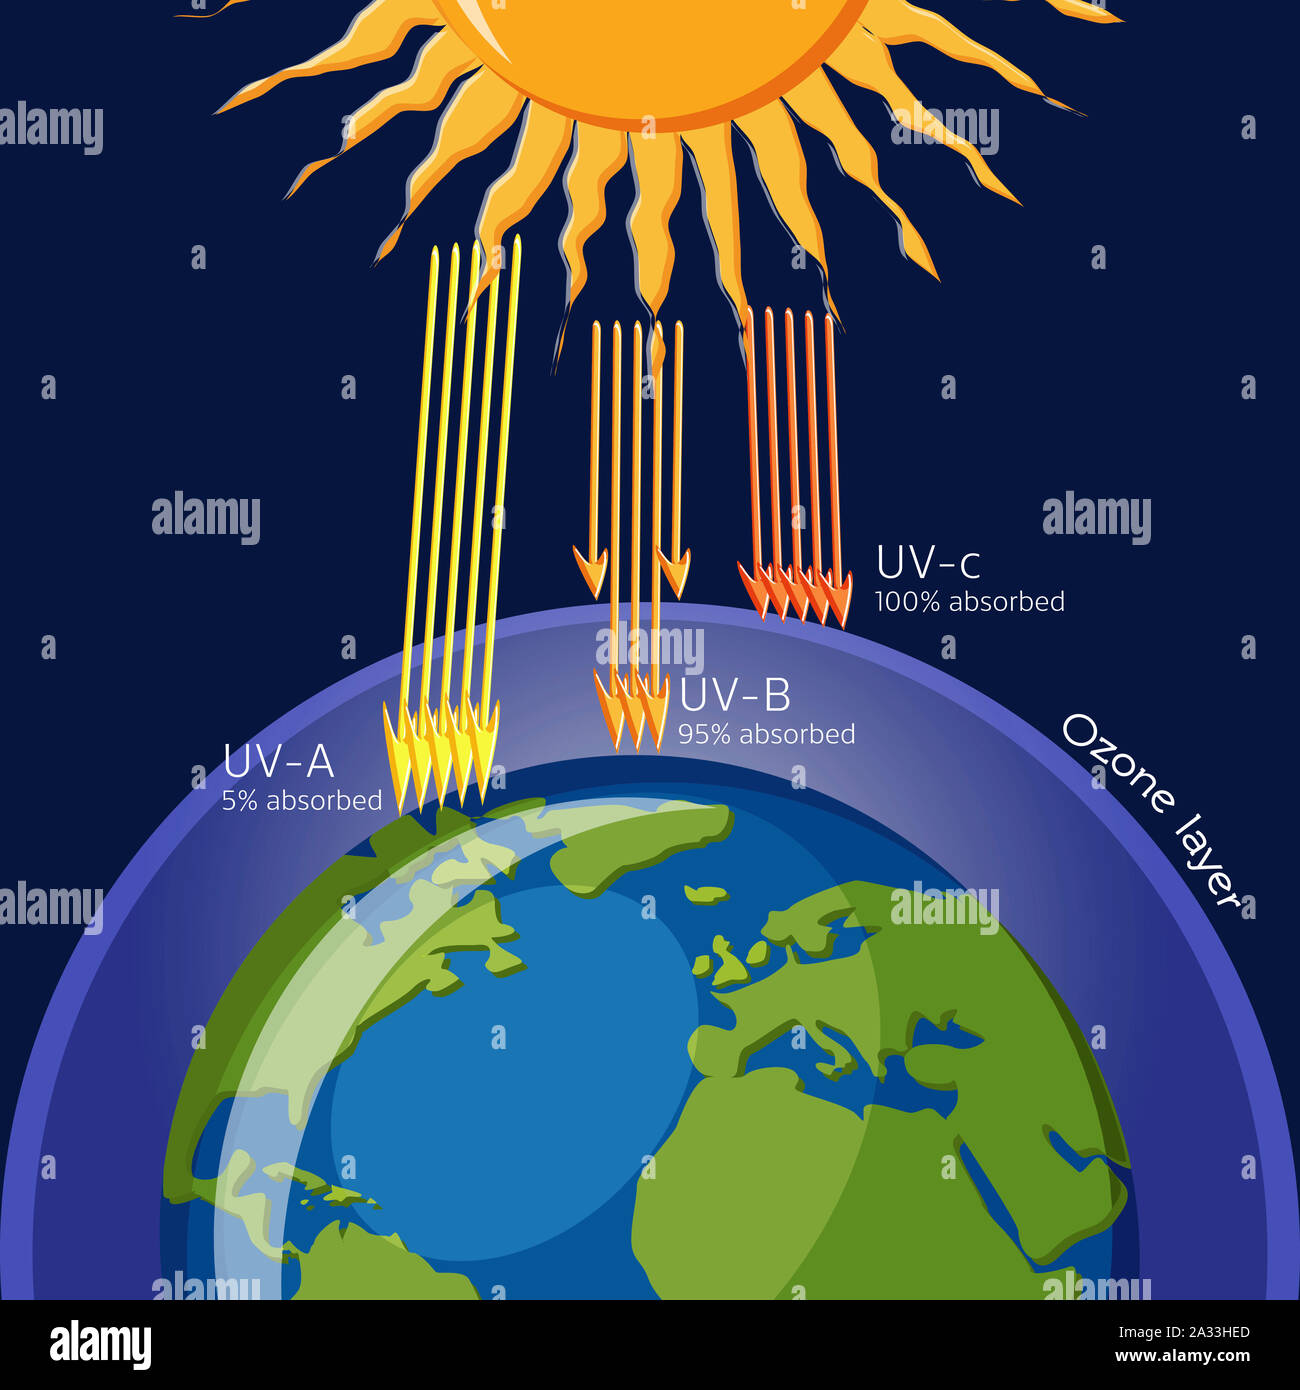 Ozone layer protection from UV radiation, illustration Stock Photo - Alamy